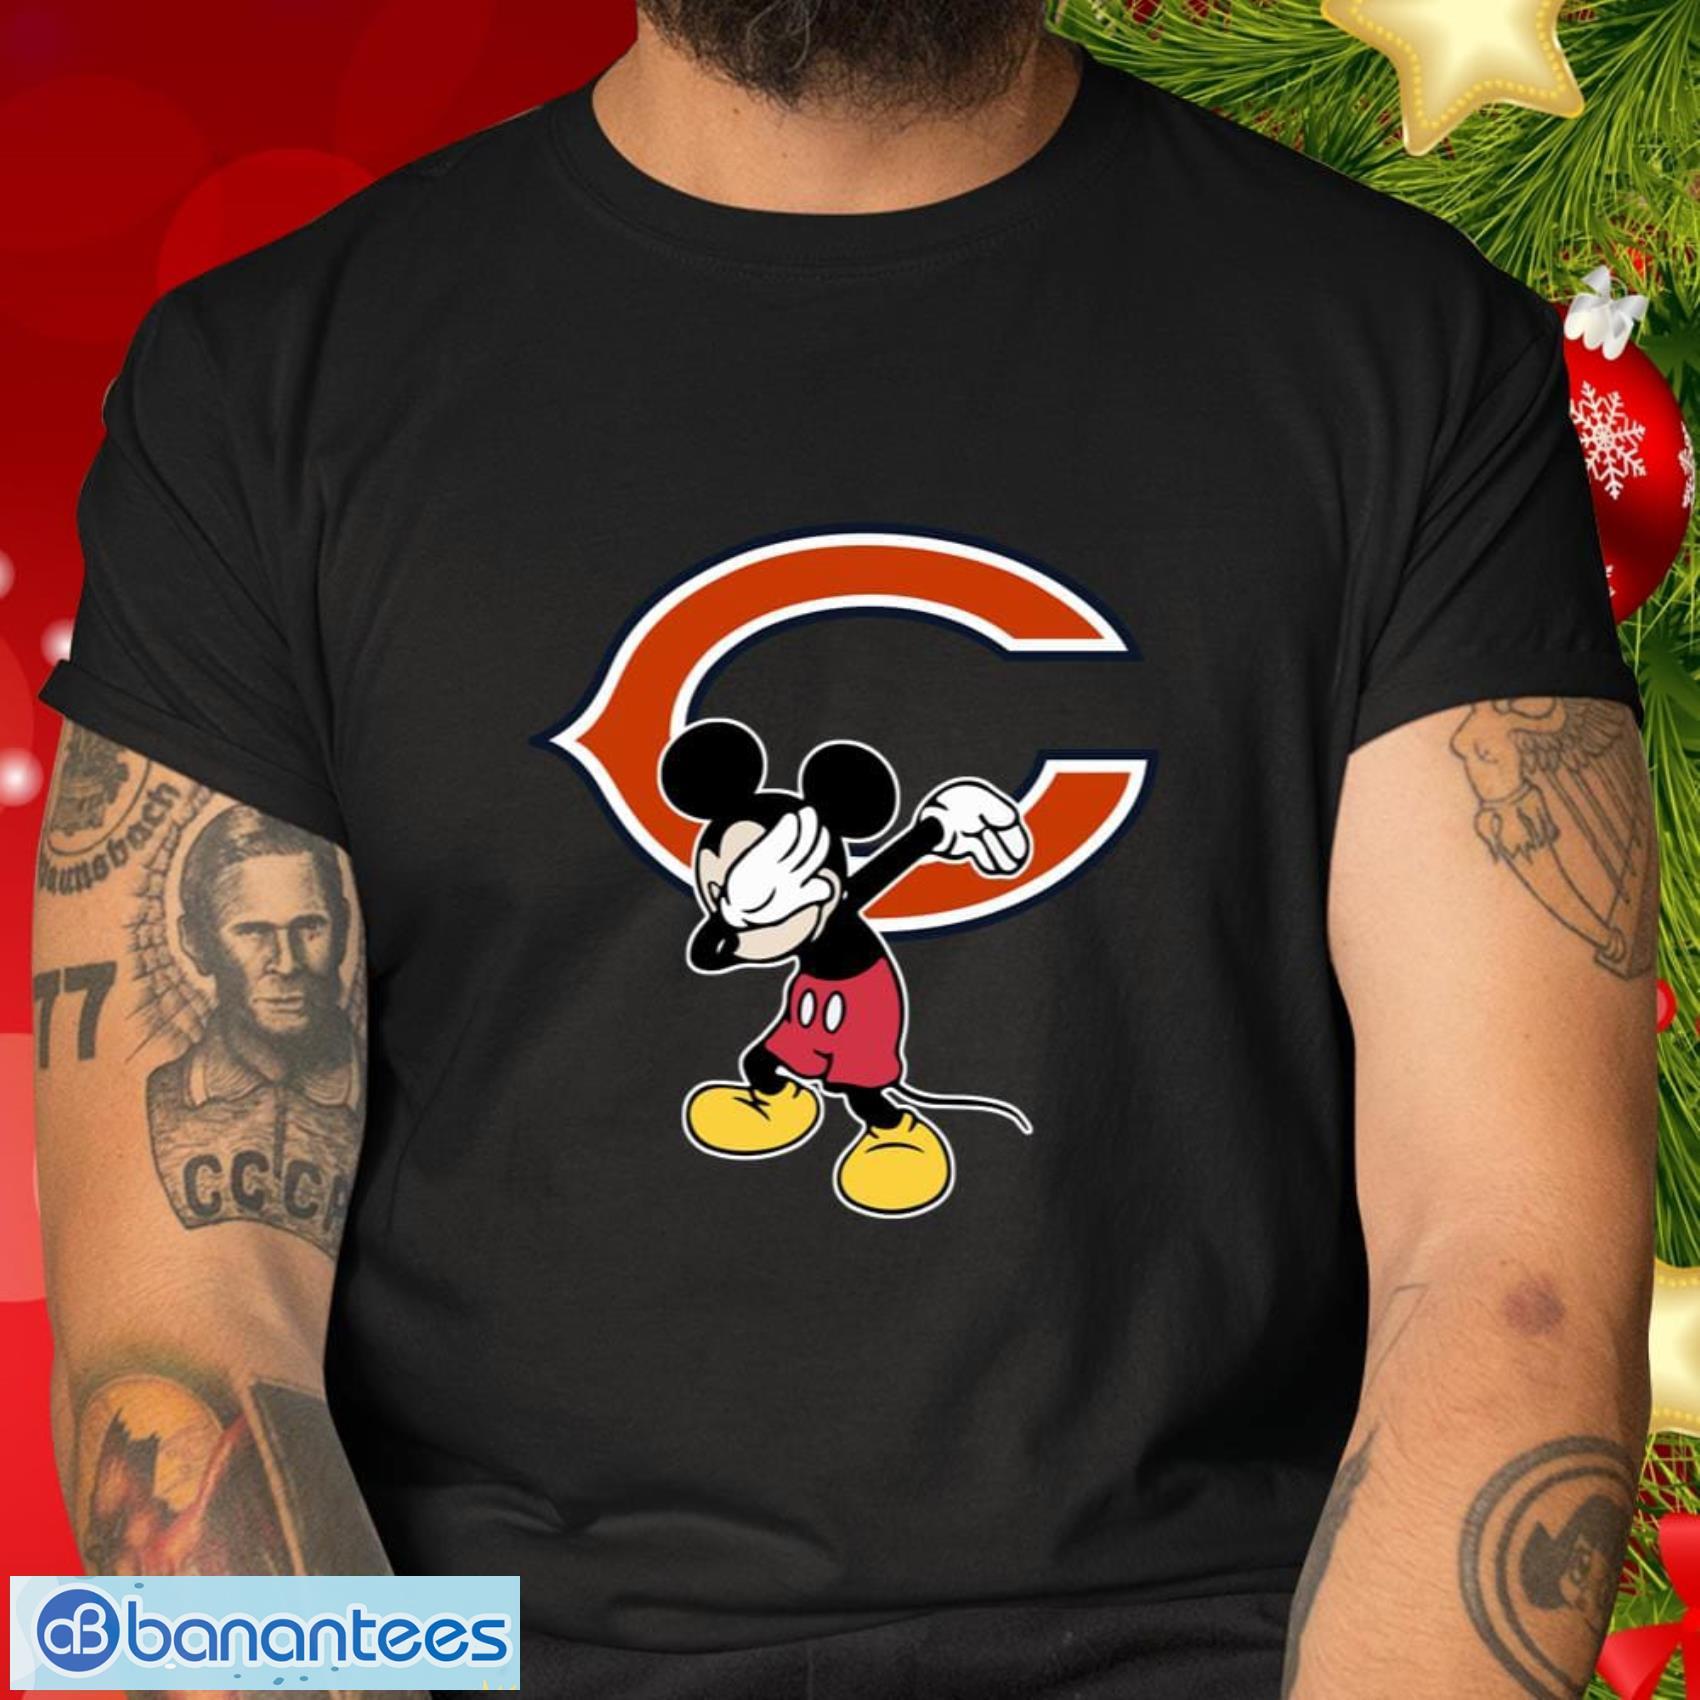 Chicago Bears NFL Football Gift Fr Fans Dabbing Mickey Disney Sports T Shirt - Chicago Bears NFL Football Dabbing Mickey Disney Sports T Shirt_2